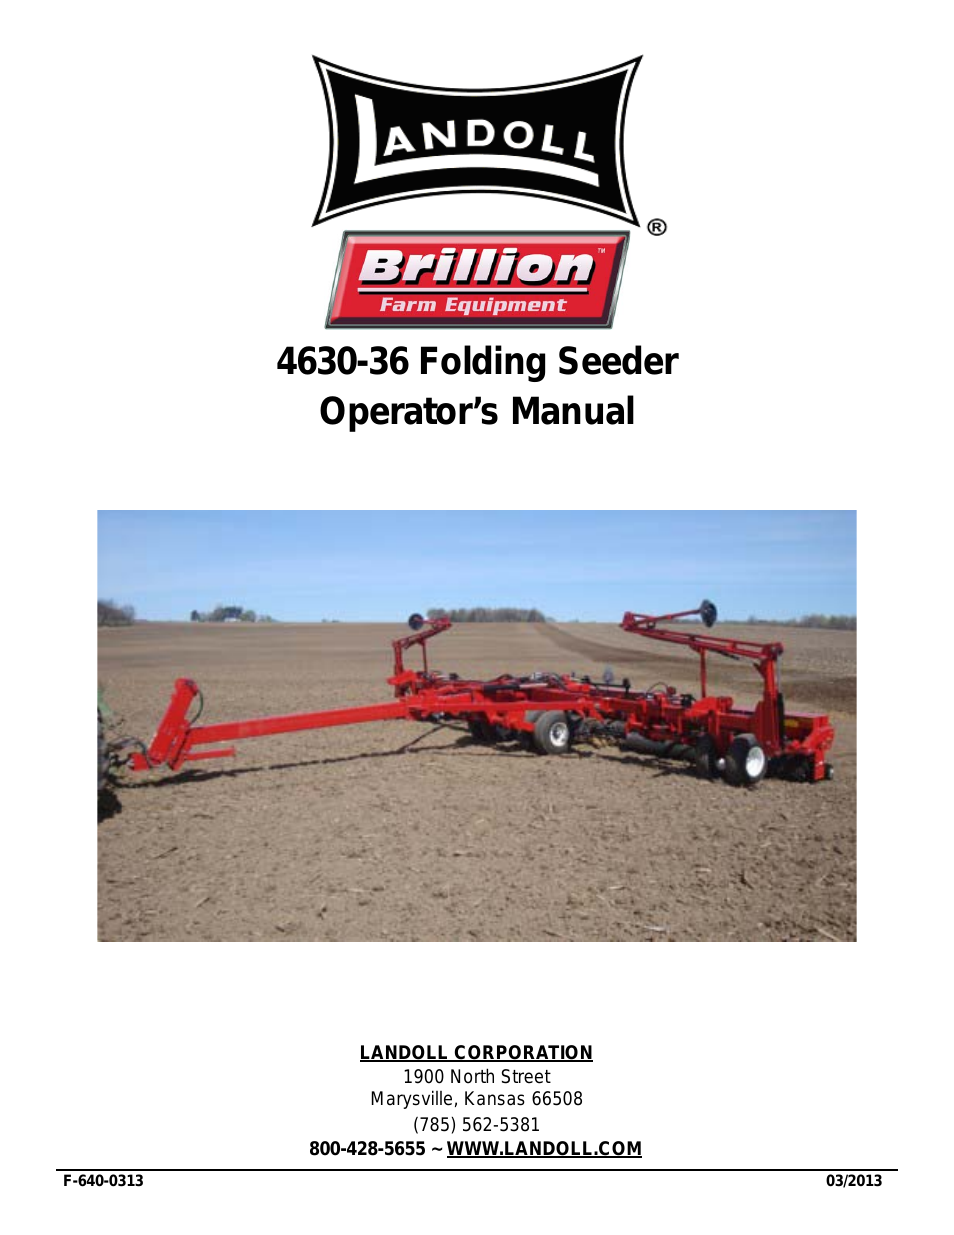 4630-36 Folding Seeder Operators Manual v.F-640-0313 03/2013